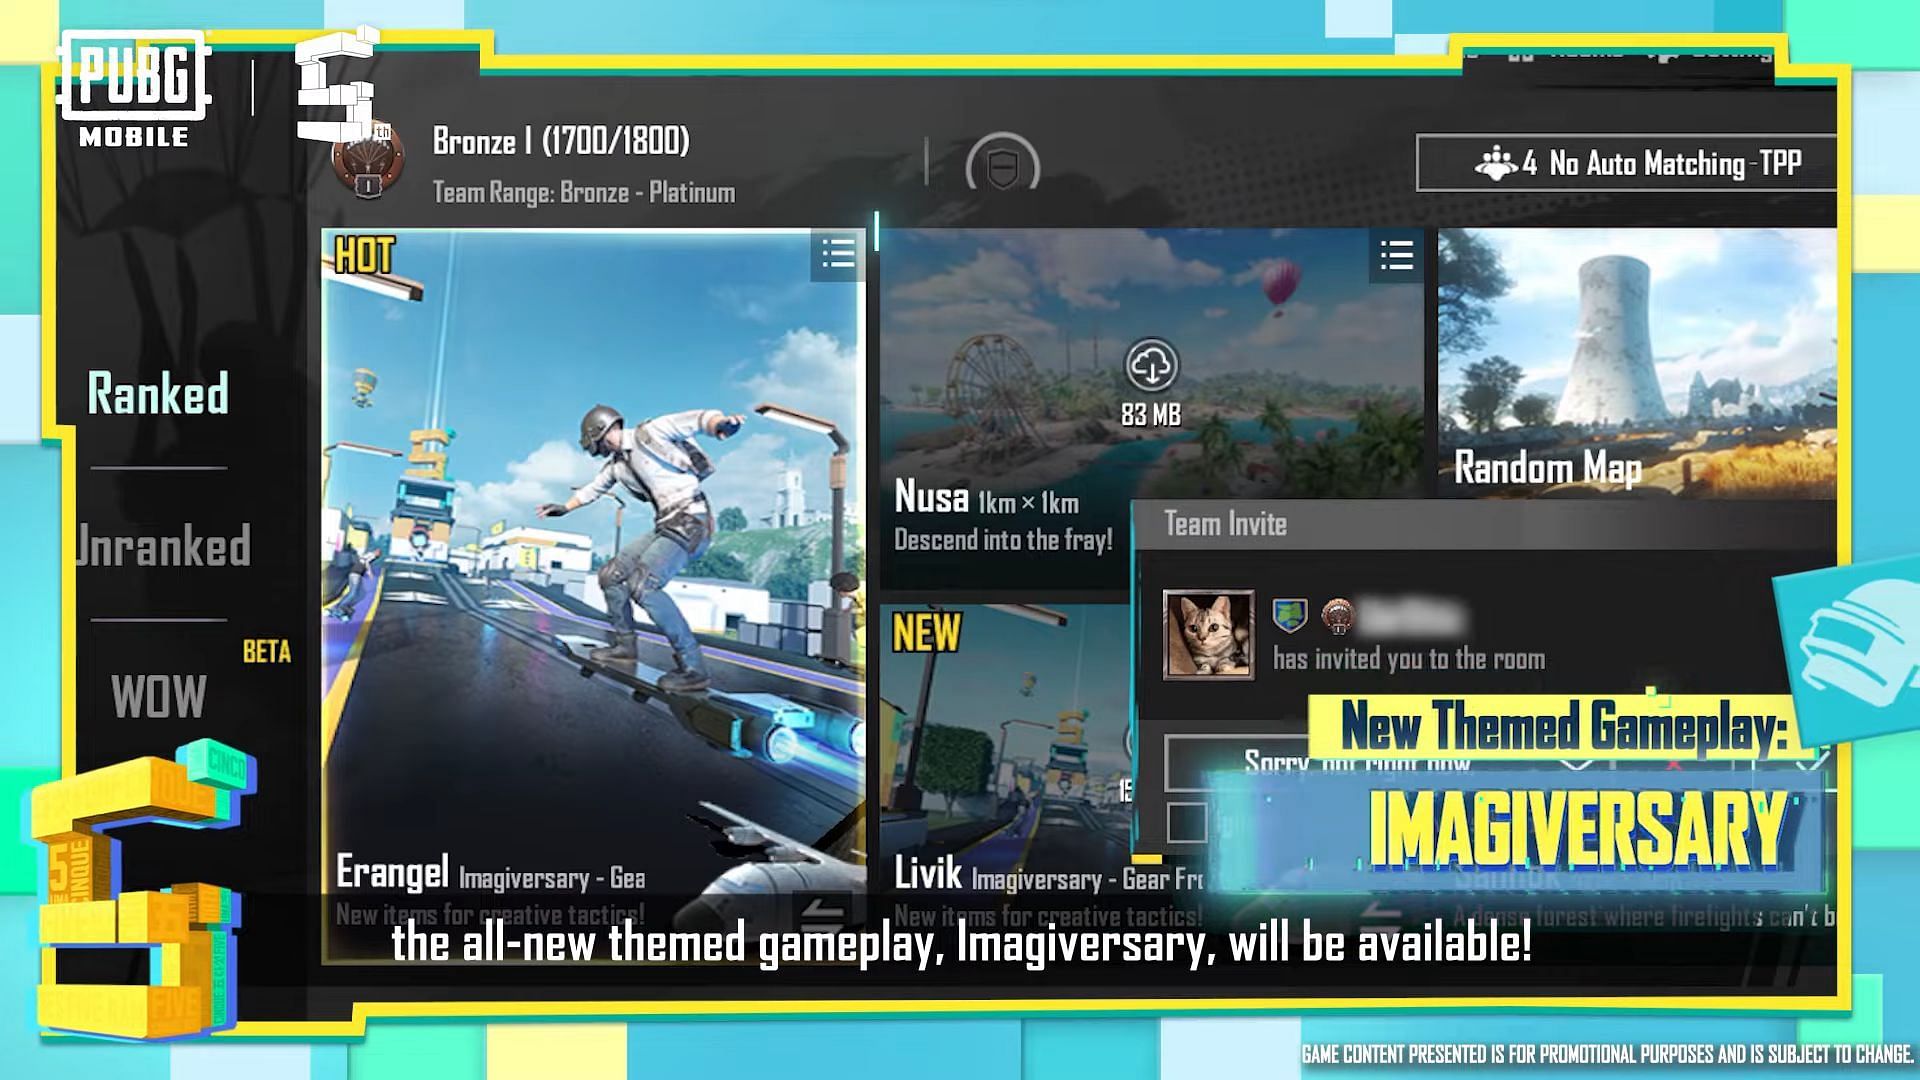 A brand-new gameplay - Imagiversary (Image via Tencent)